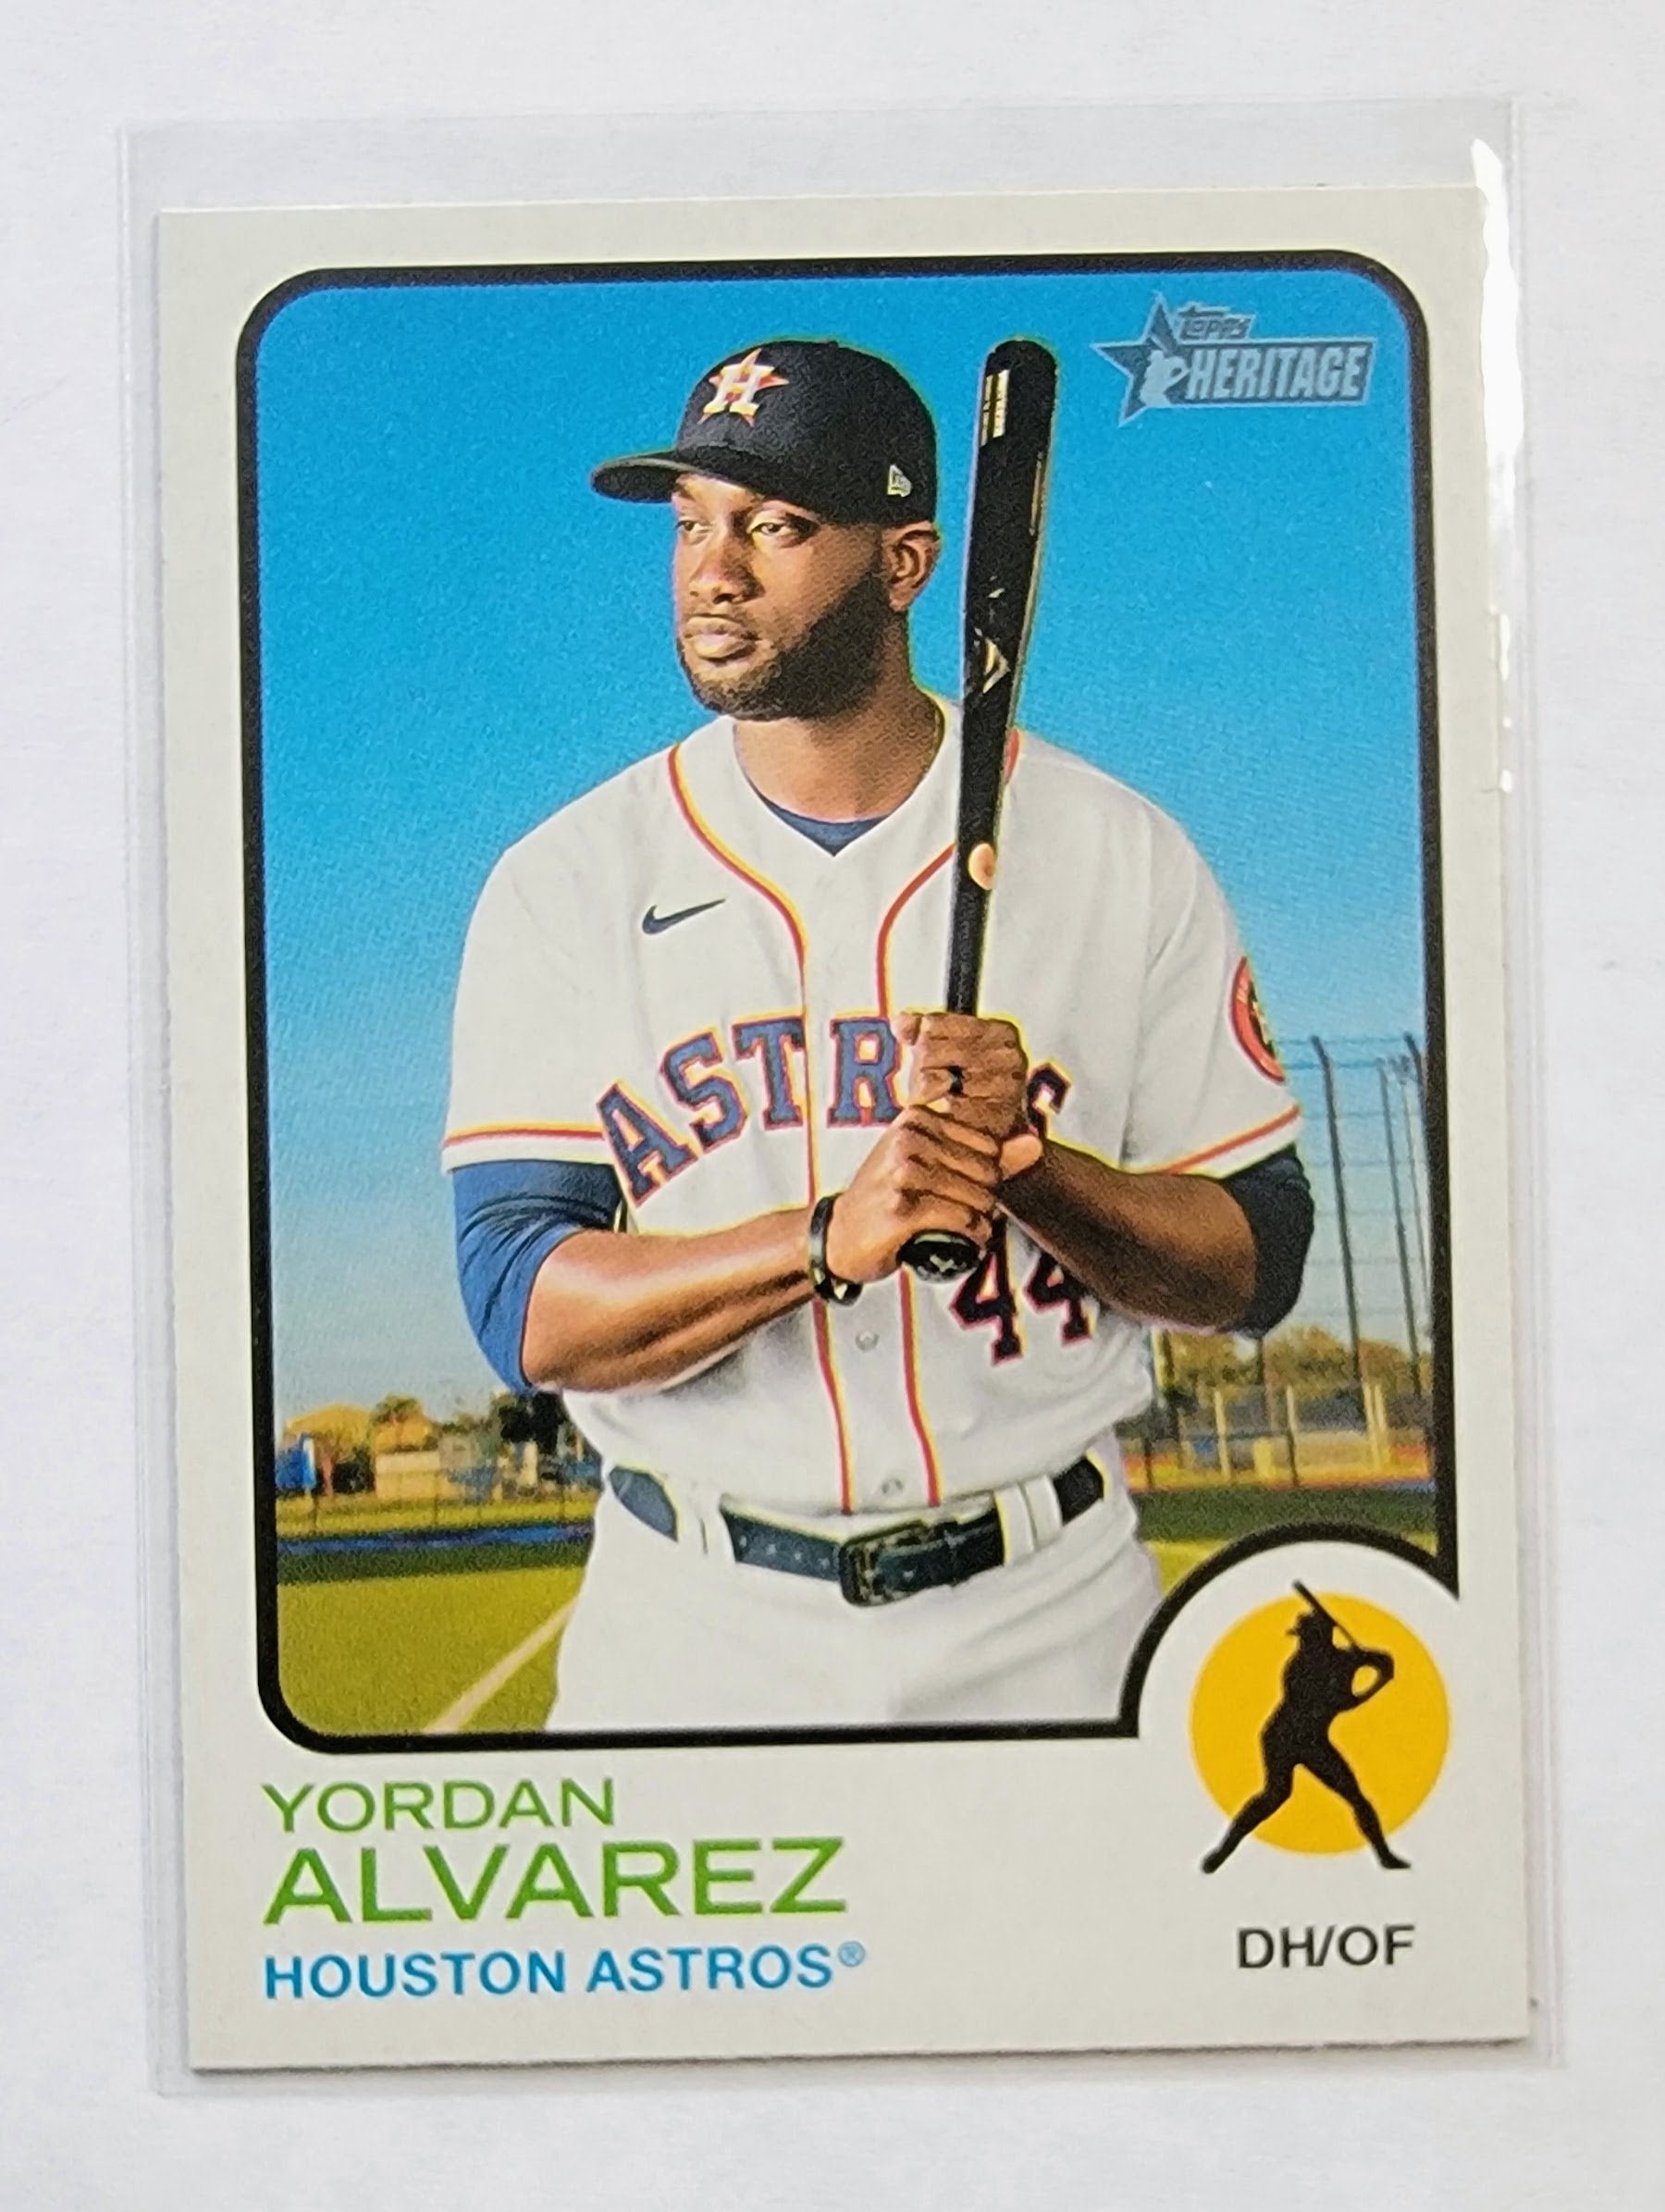 2022 Topps Heritage Yordan Alvarez Baseball Card - Vintage